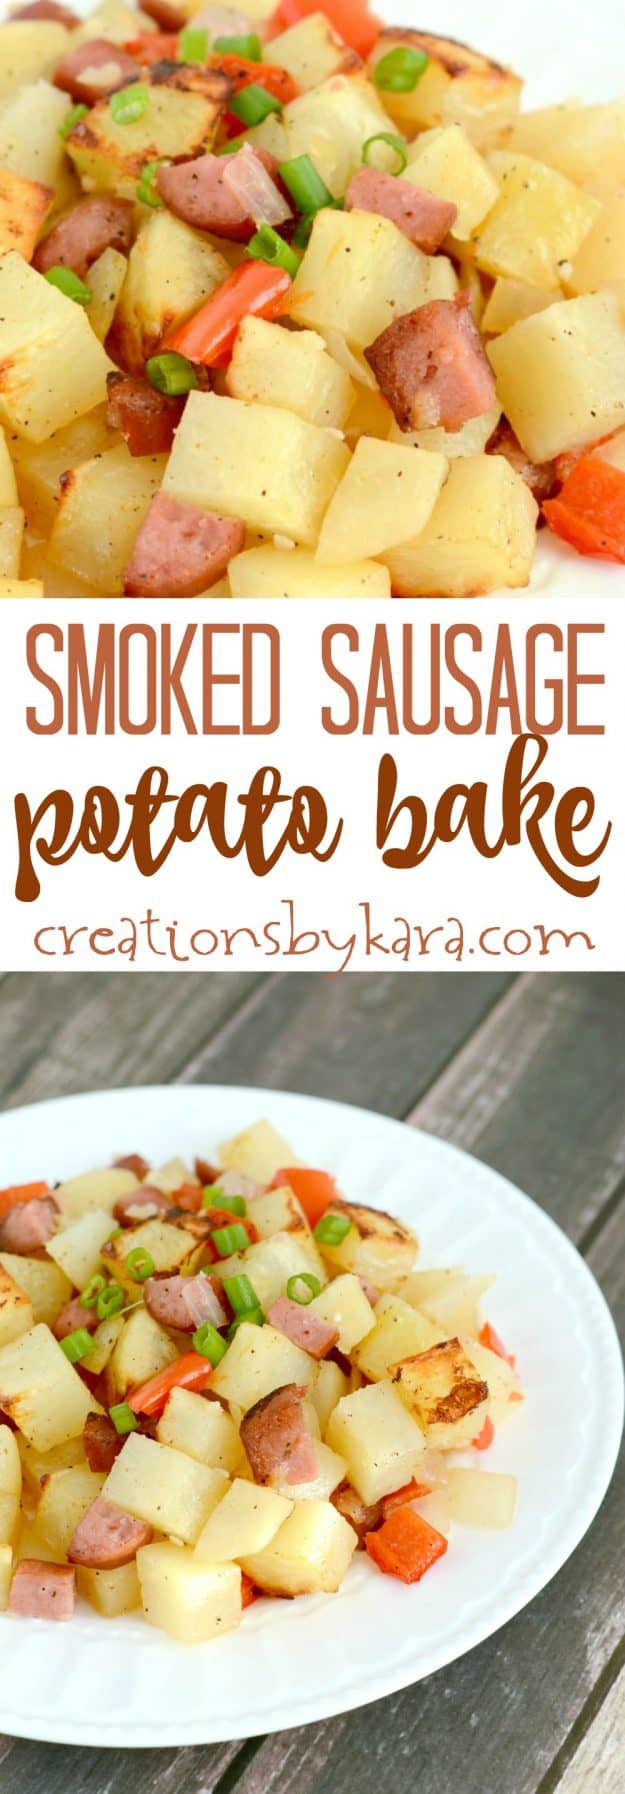 smoked sausage and potato bake pinterest collage